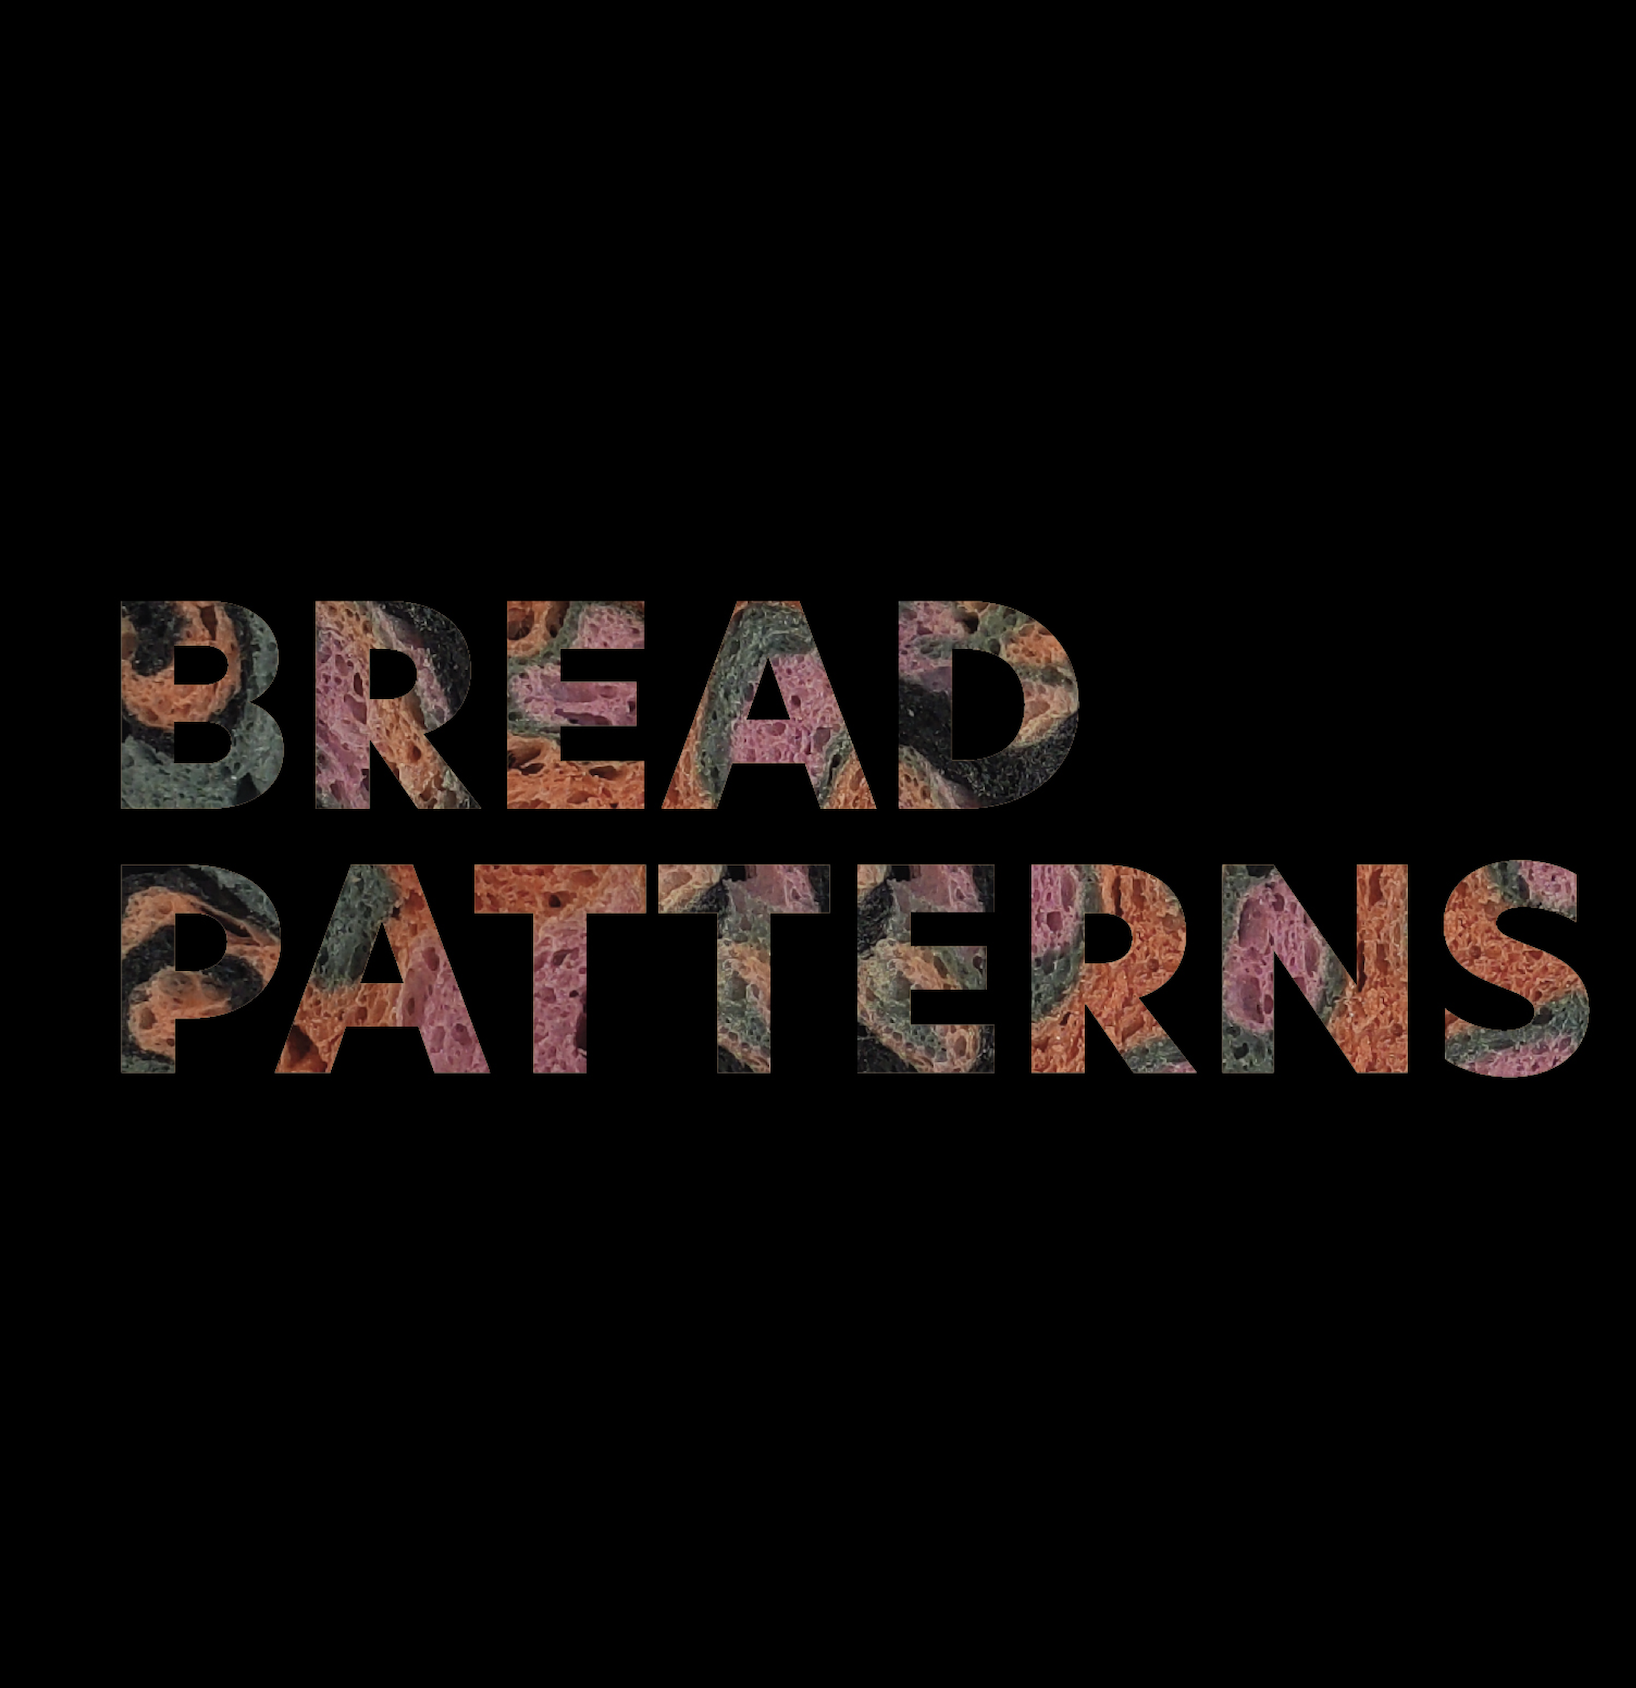 sourdough bread instagram influencer athens greece nikos of @frommydadsbakery micro bakery loaves of sourdough bread for sale locally in athens 15